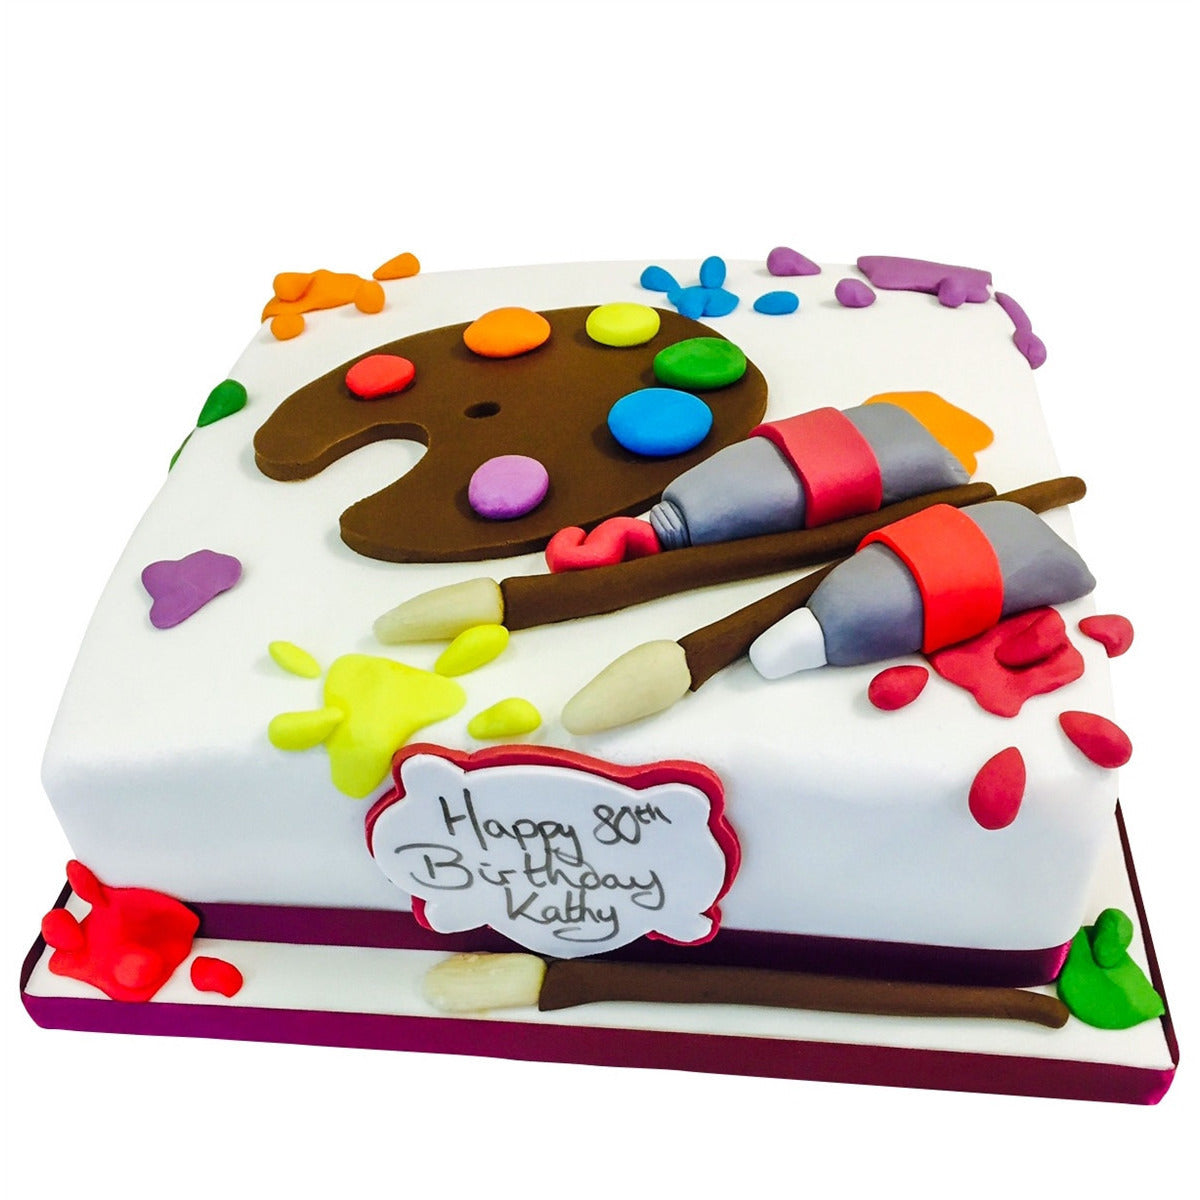 Pin by Shari Lofton on Party Theme Ideas | Art party cakes, Art birthday  cake, Artist cake